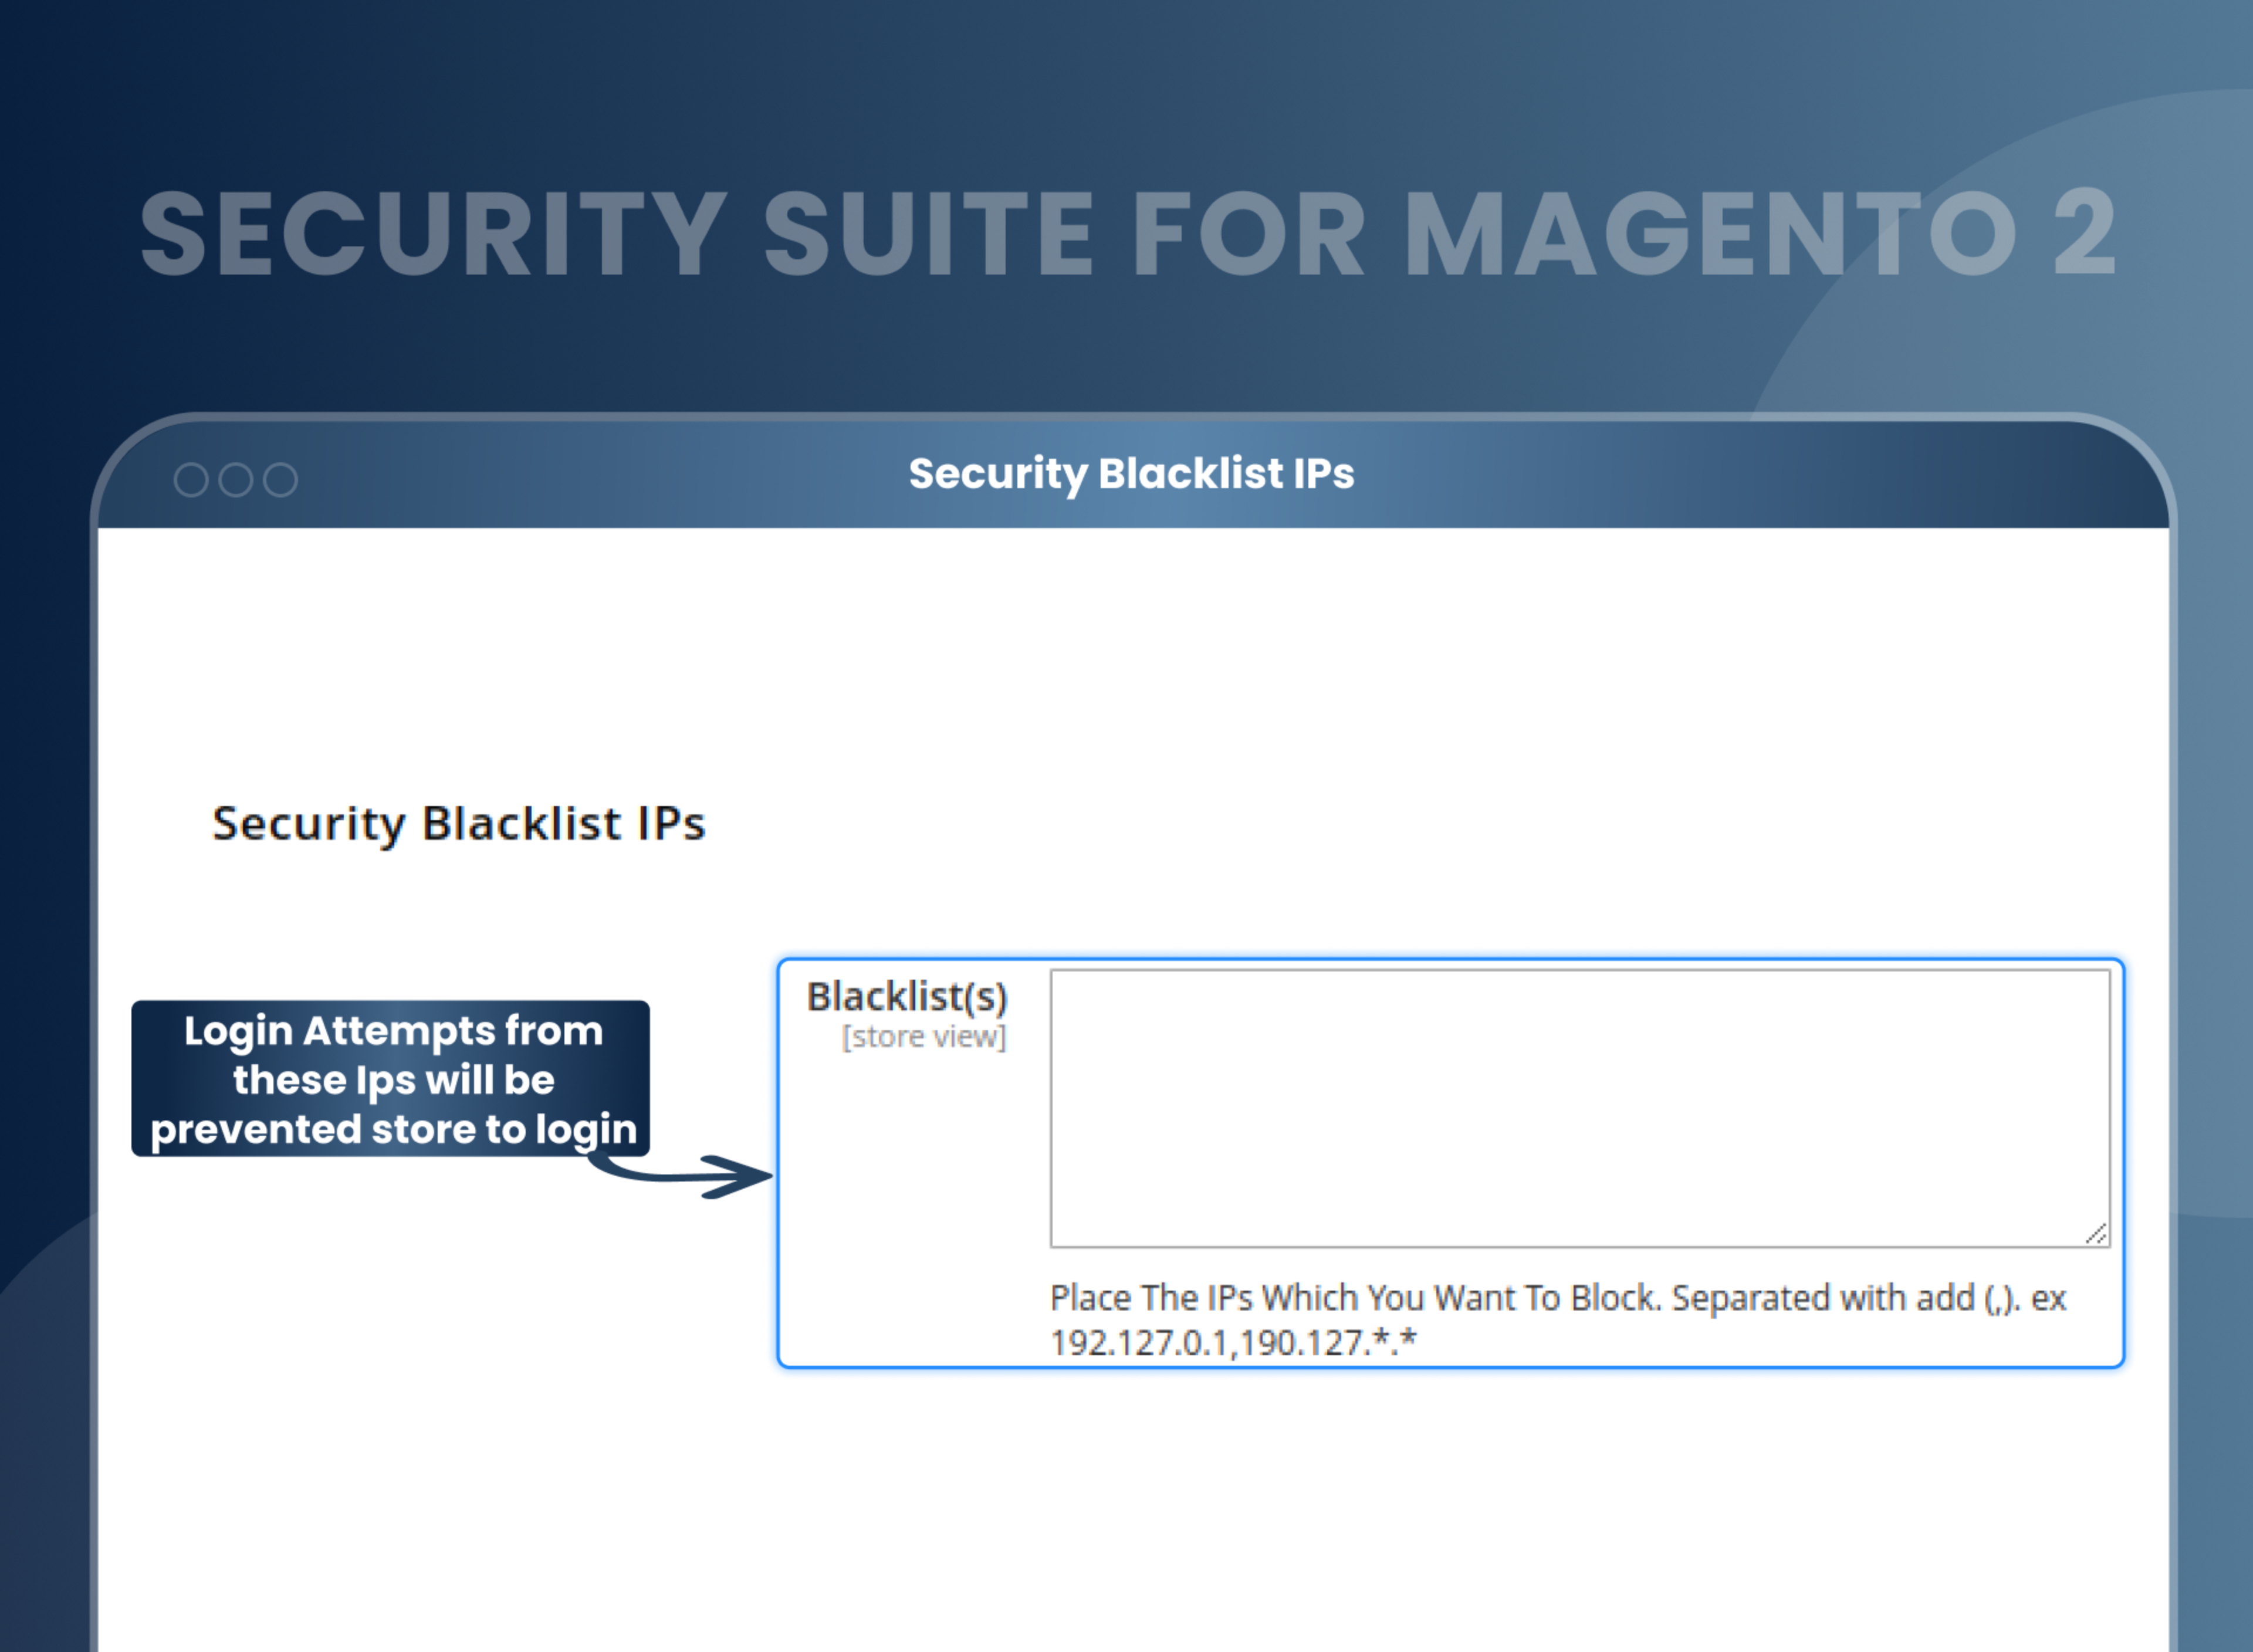 Security Blacklist IPs